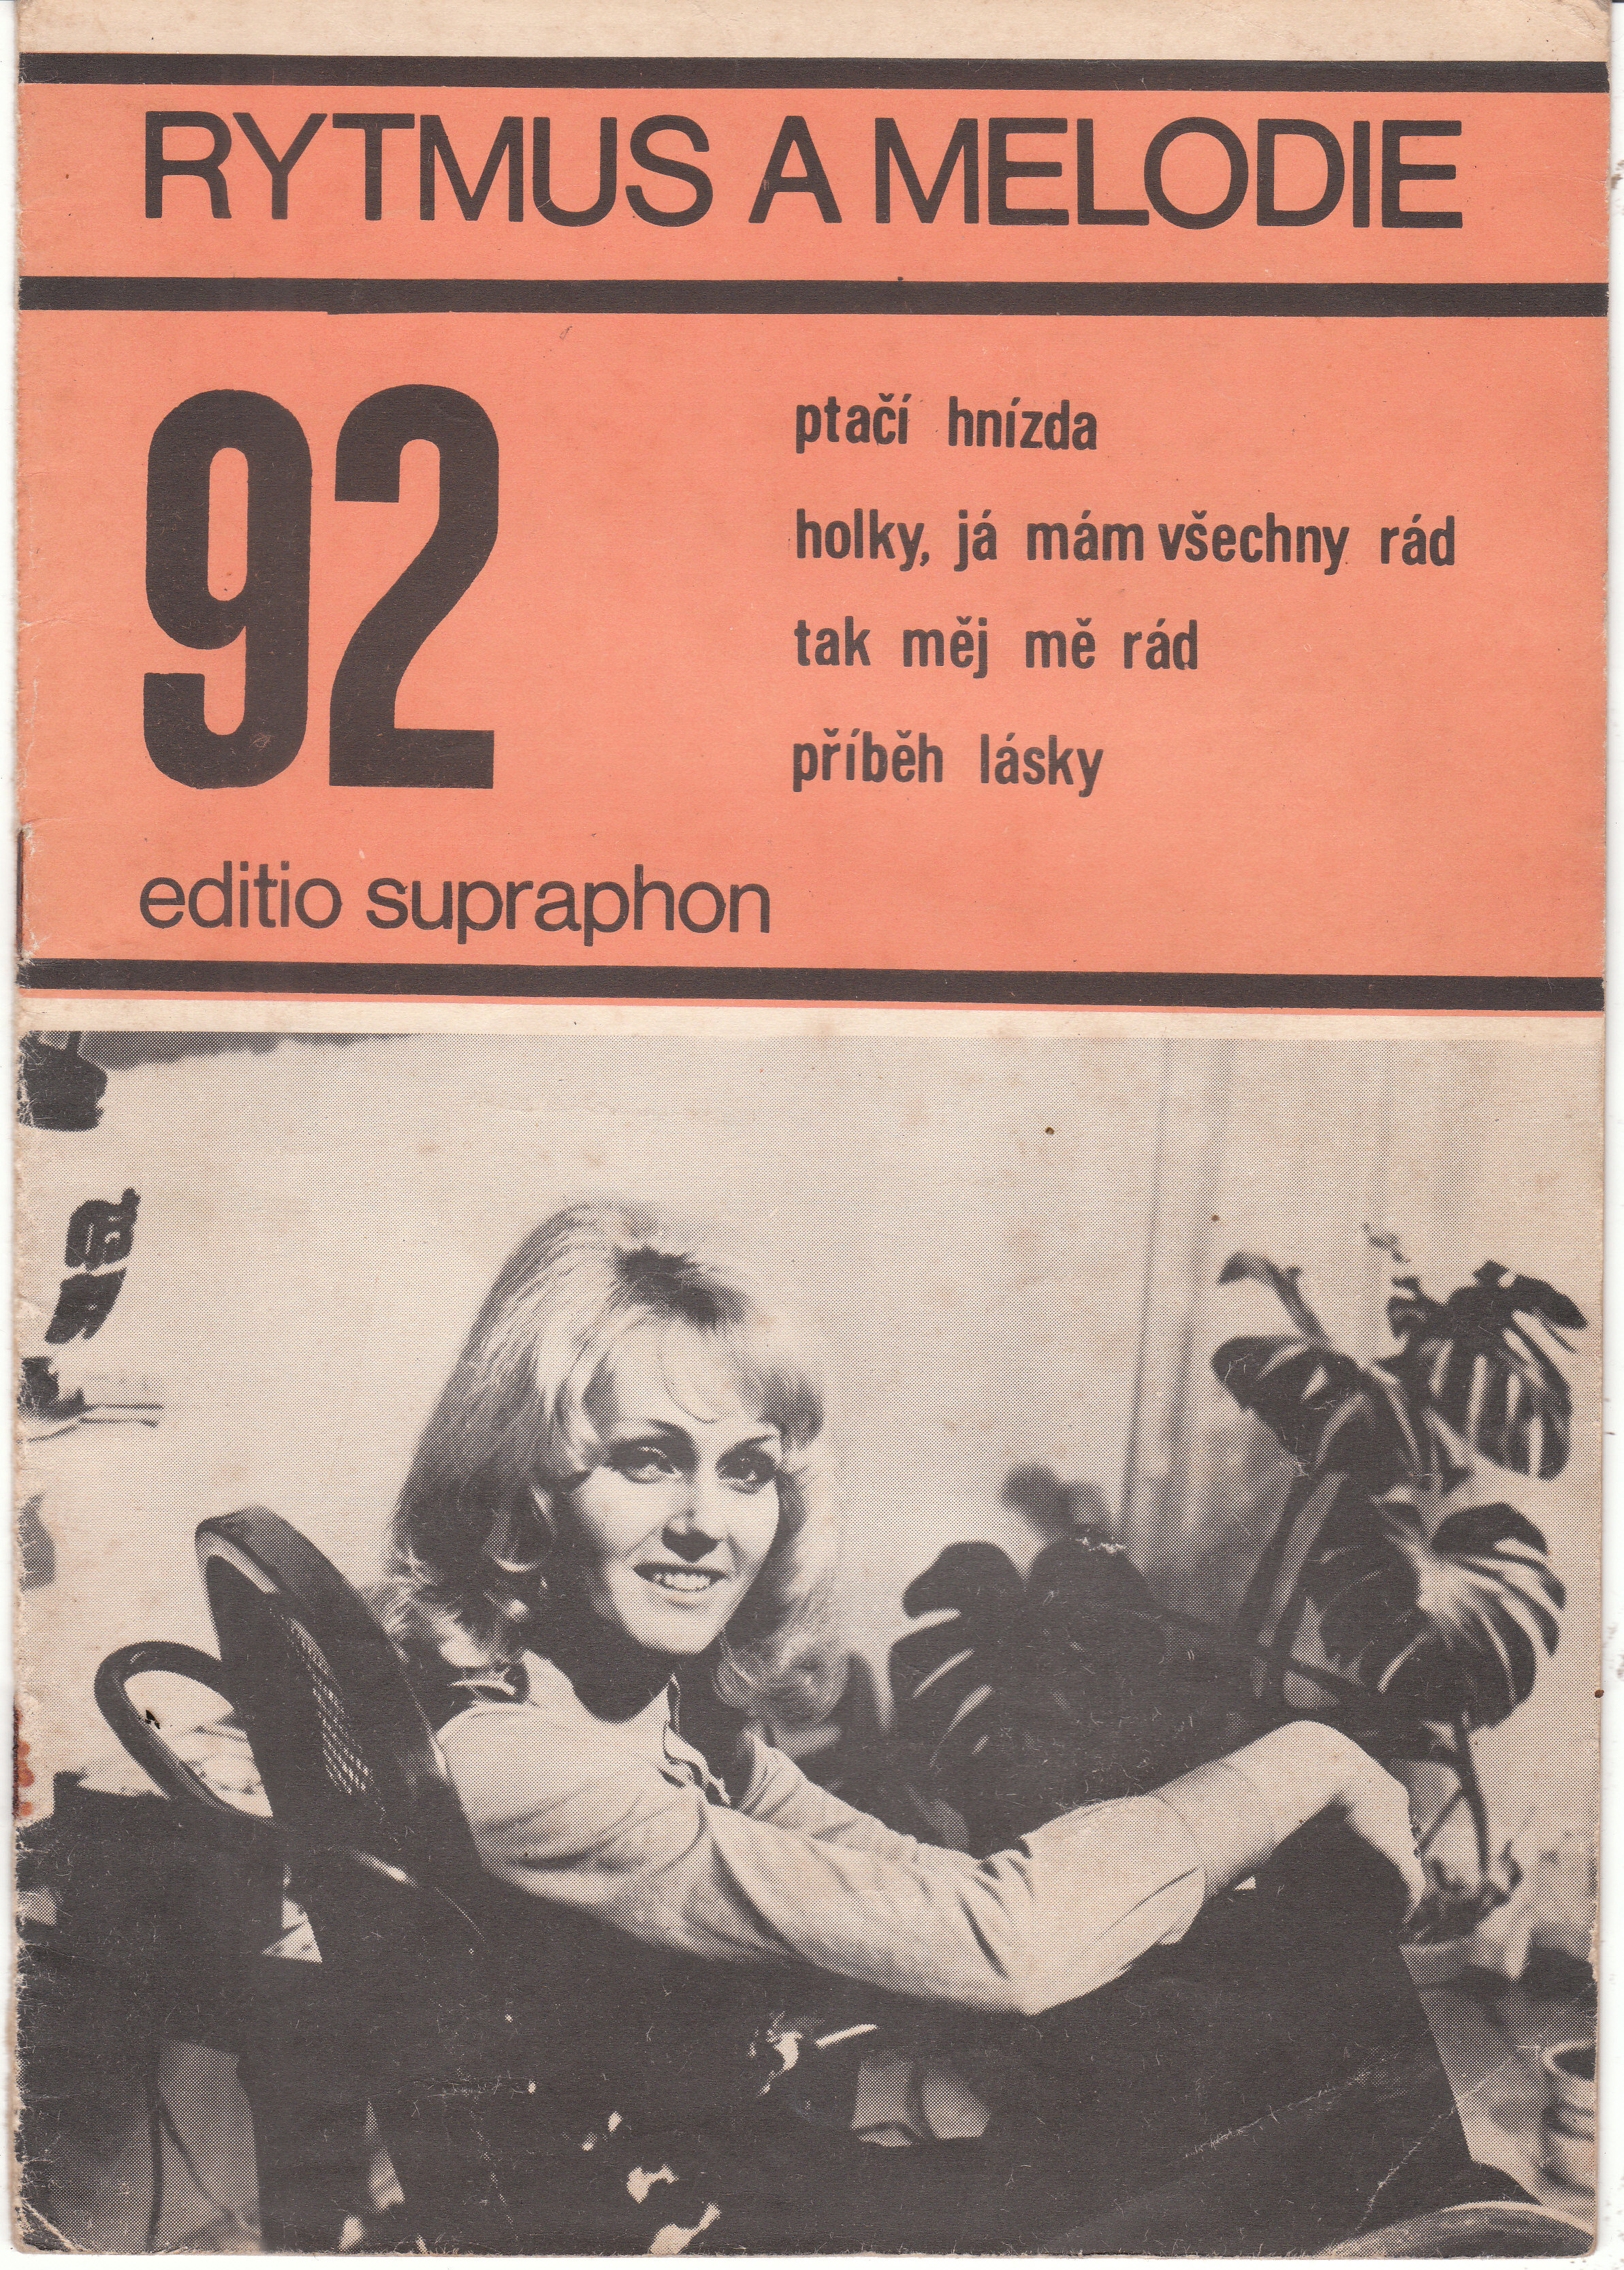 1973-Rytmus a melodie 92